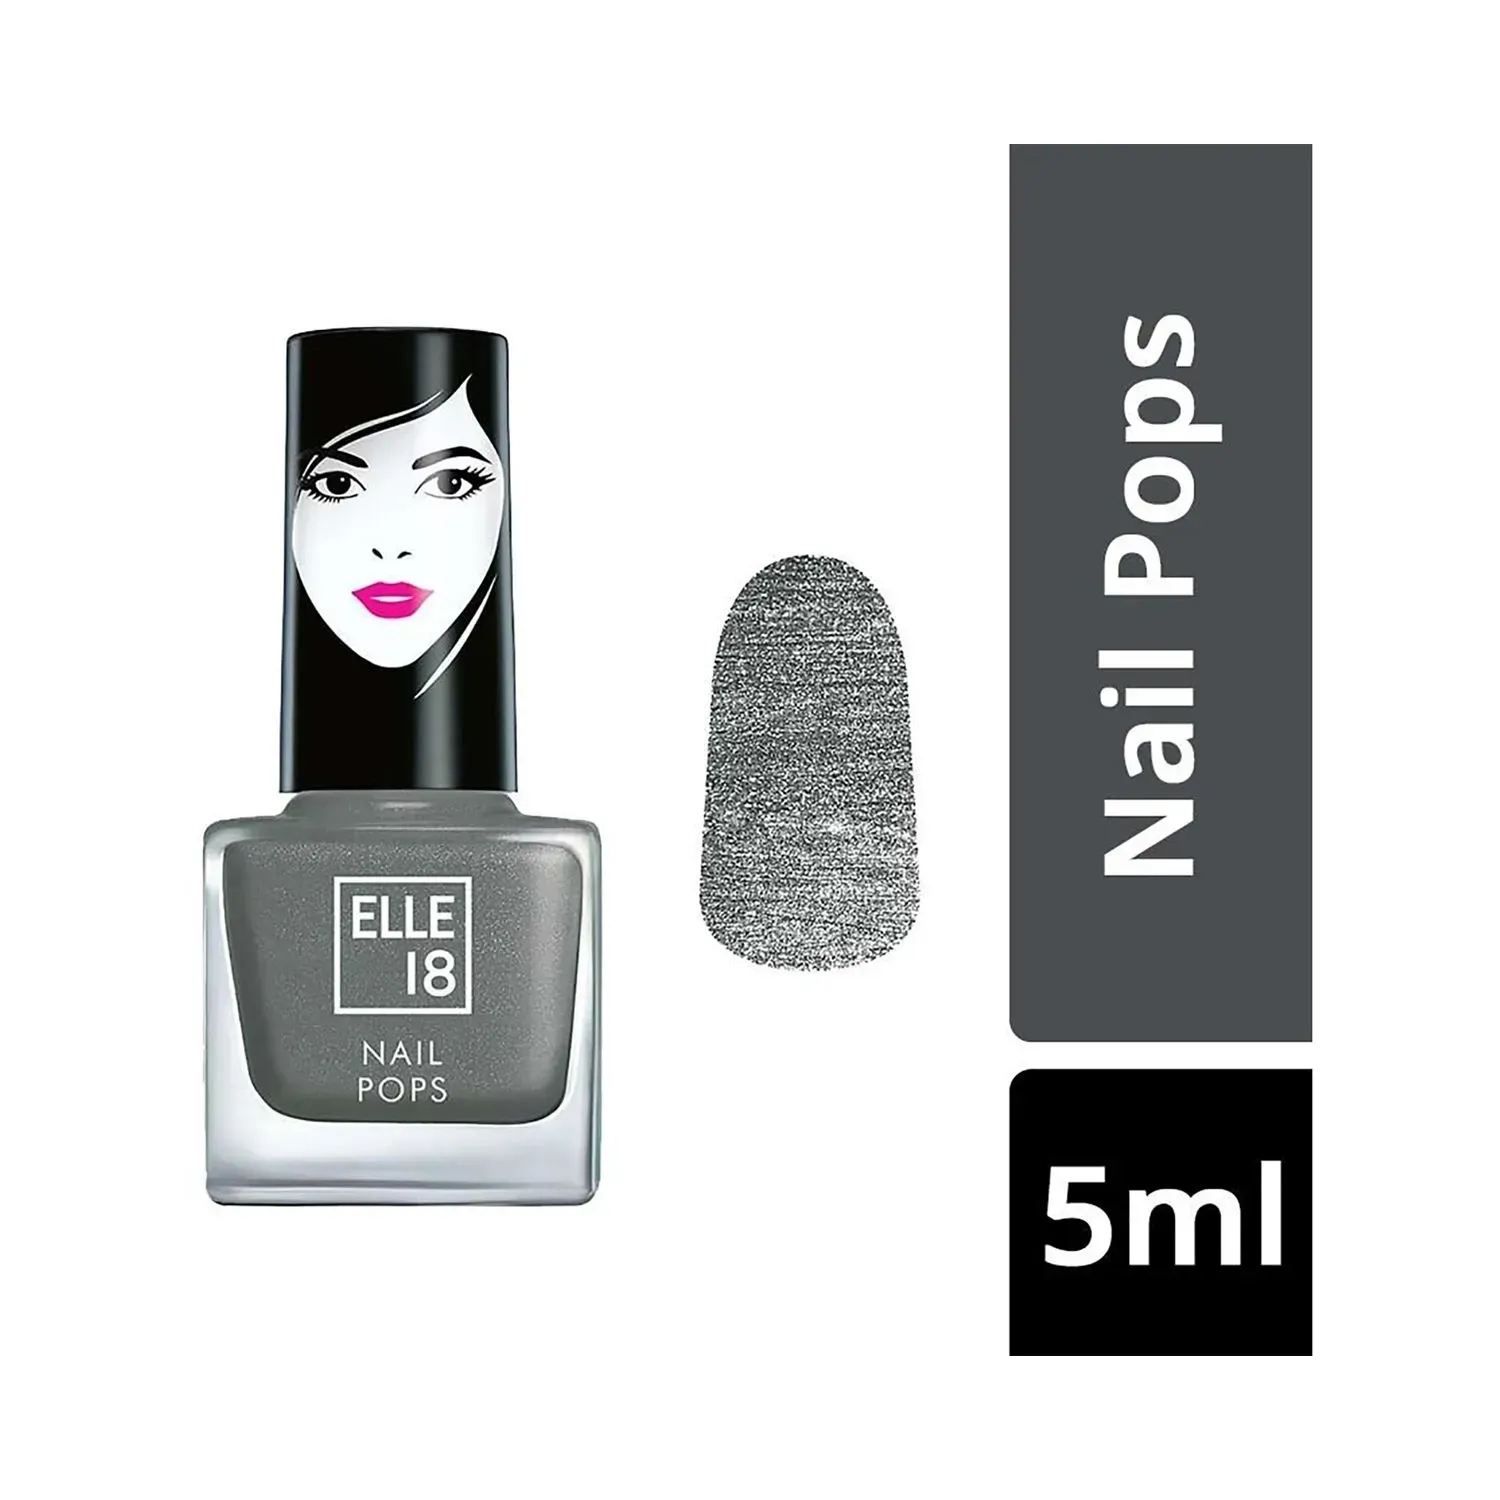 Elle 18 | Elle 18 Nail Pops Nail Color - Shade 95 (5ml)